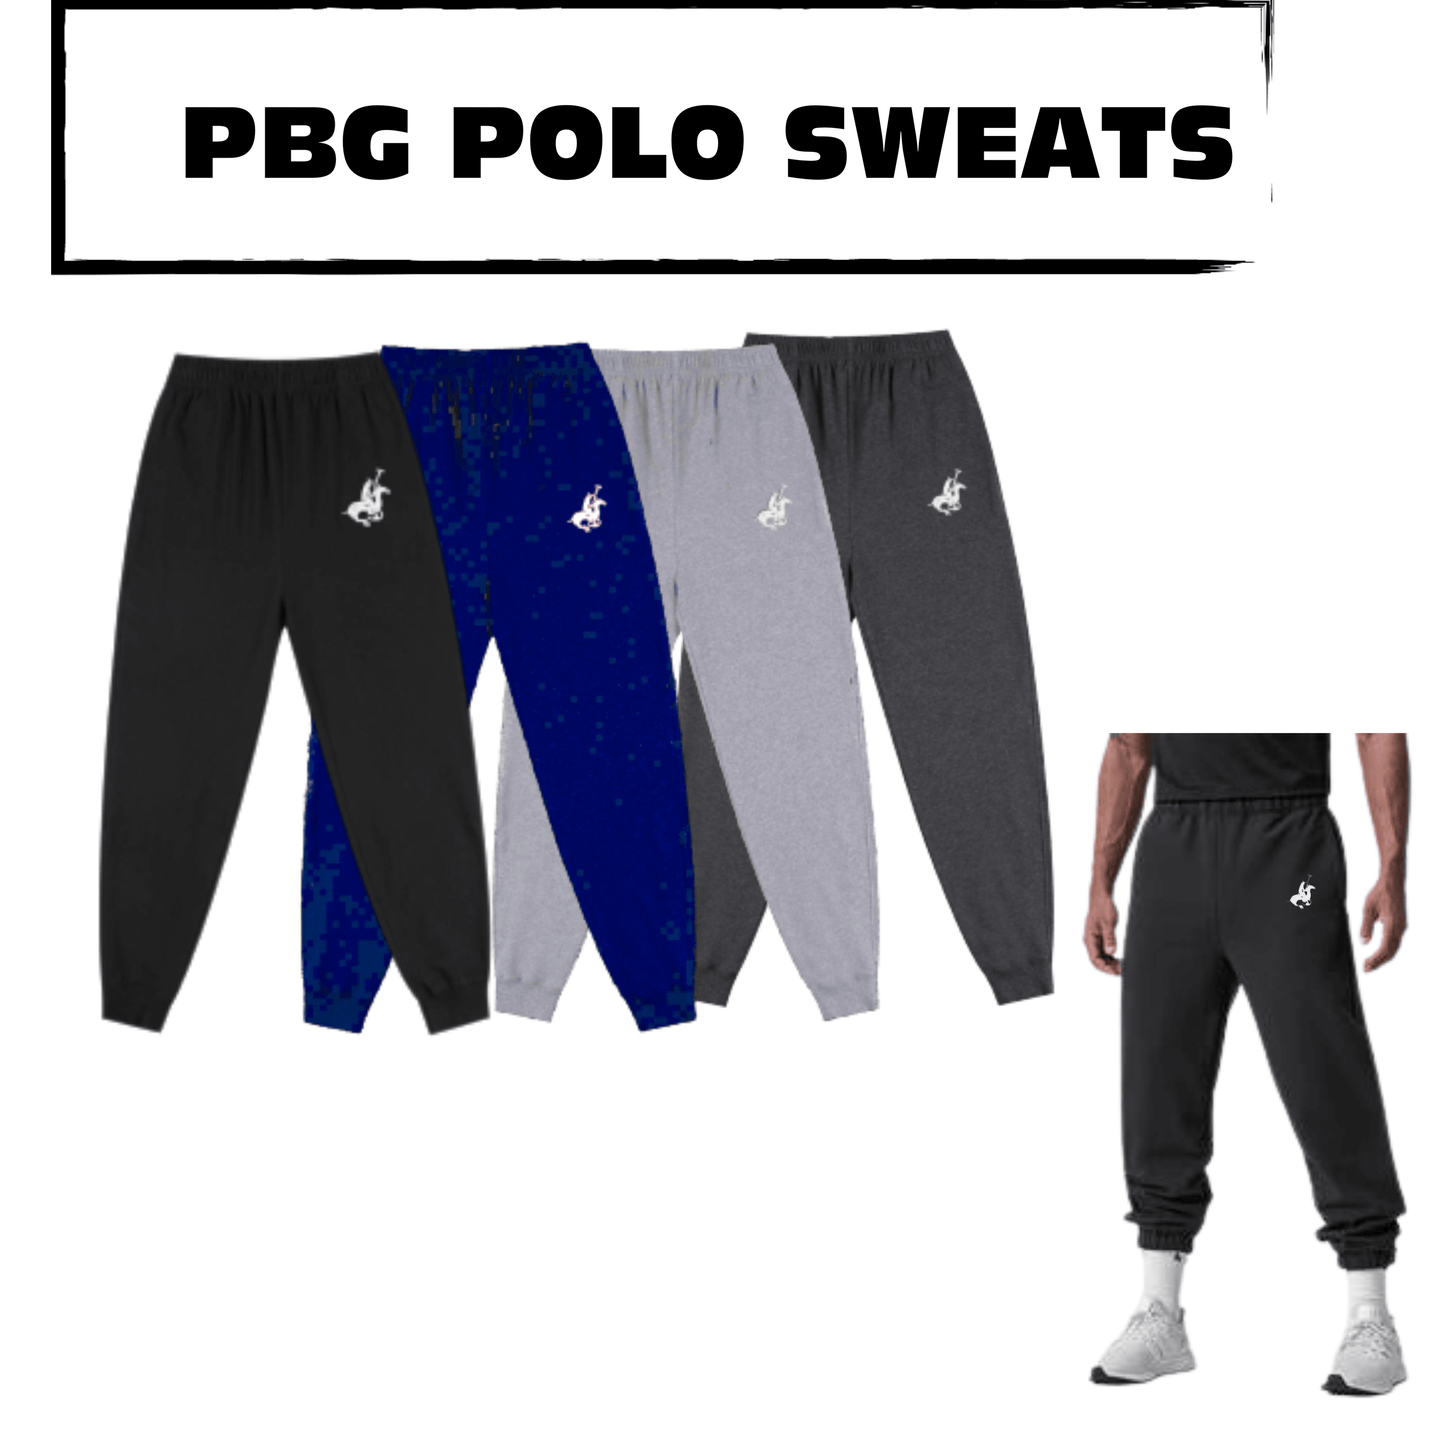 4 Pack PBG Men's Polo Drawstring Sweatpants Cotton Blend 4 Colors - PremiumBrandGoods